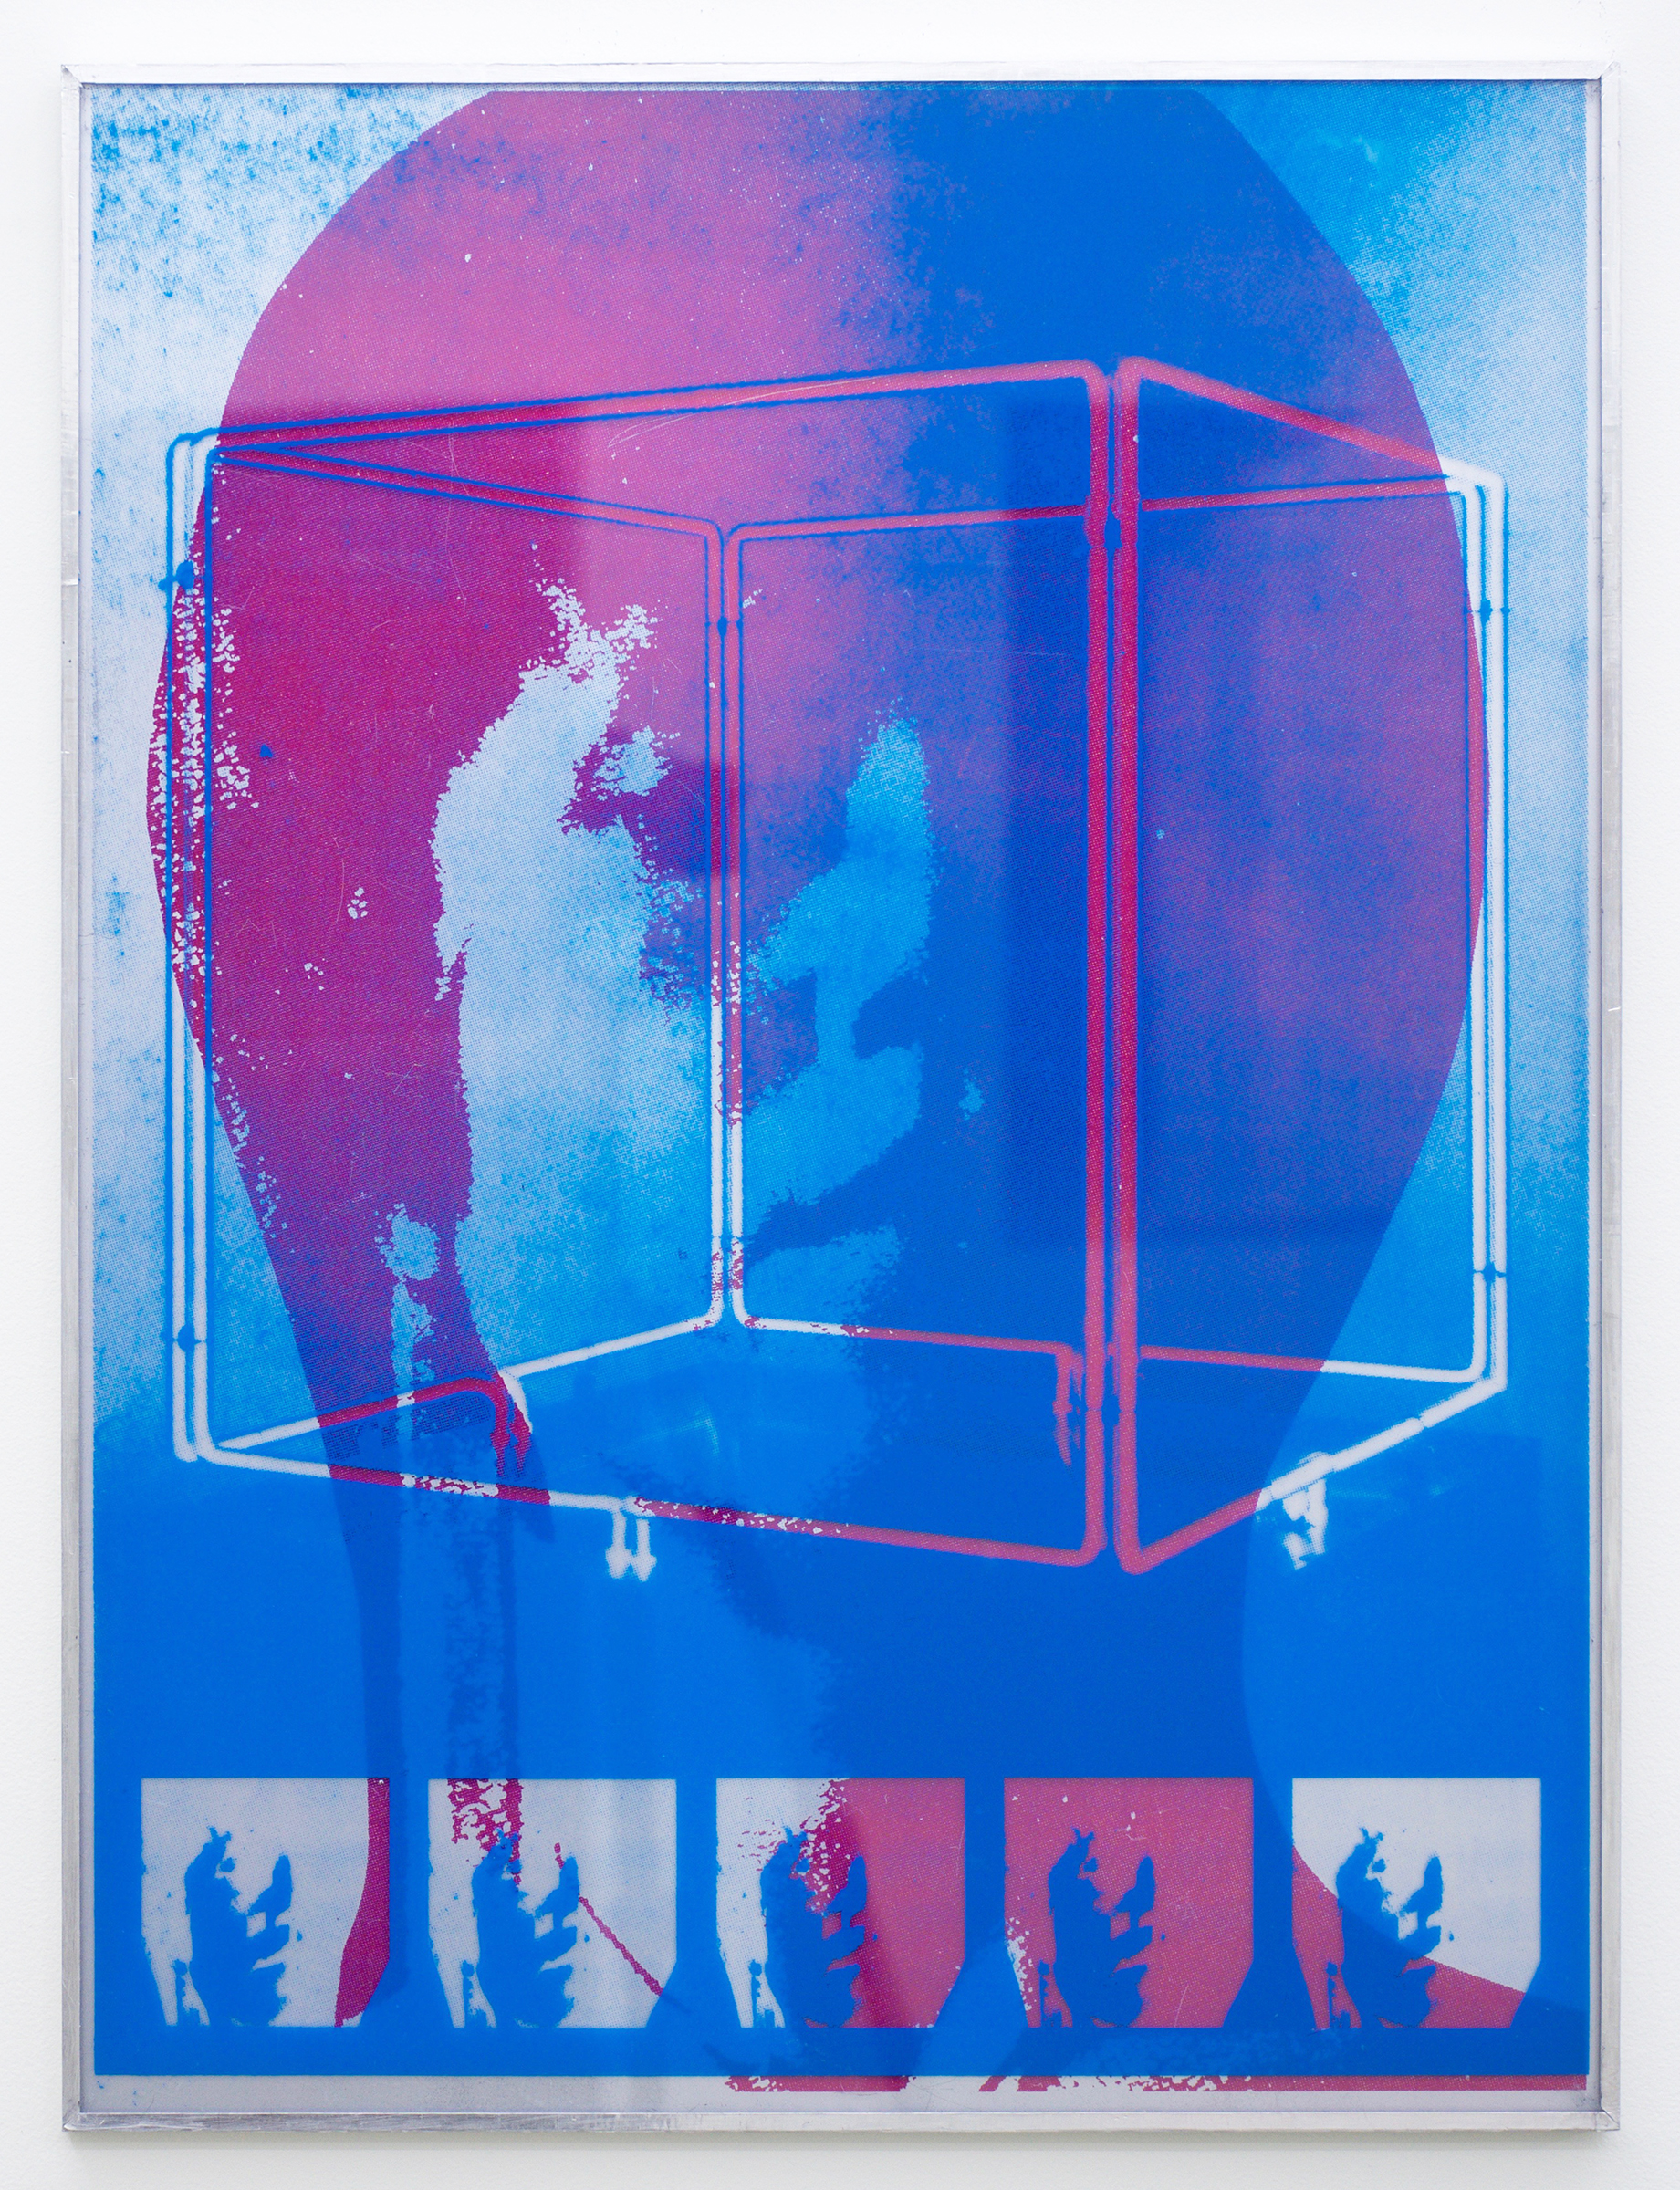  GWENAËL RATTKE  Plastic Poster #1 , 2016 acrylic and unique silkscreen on plexiglas, 26” x 19.75” 